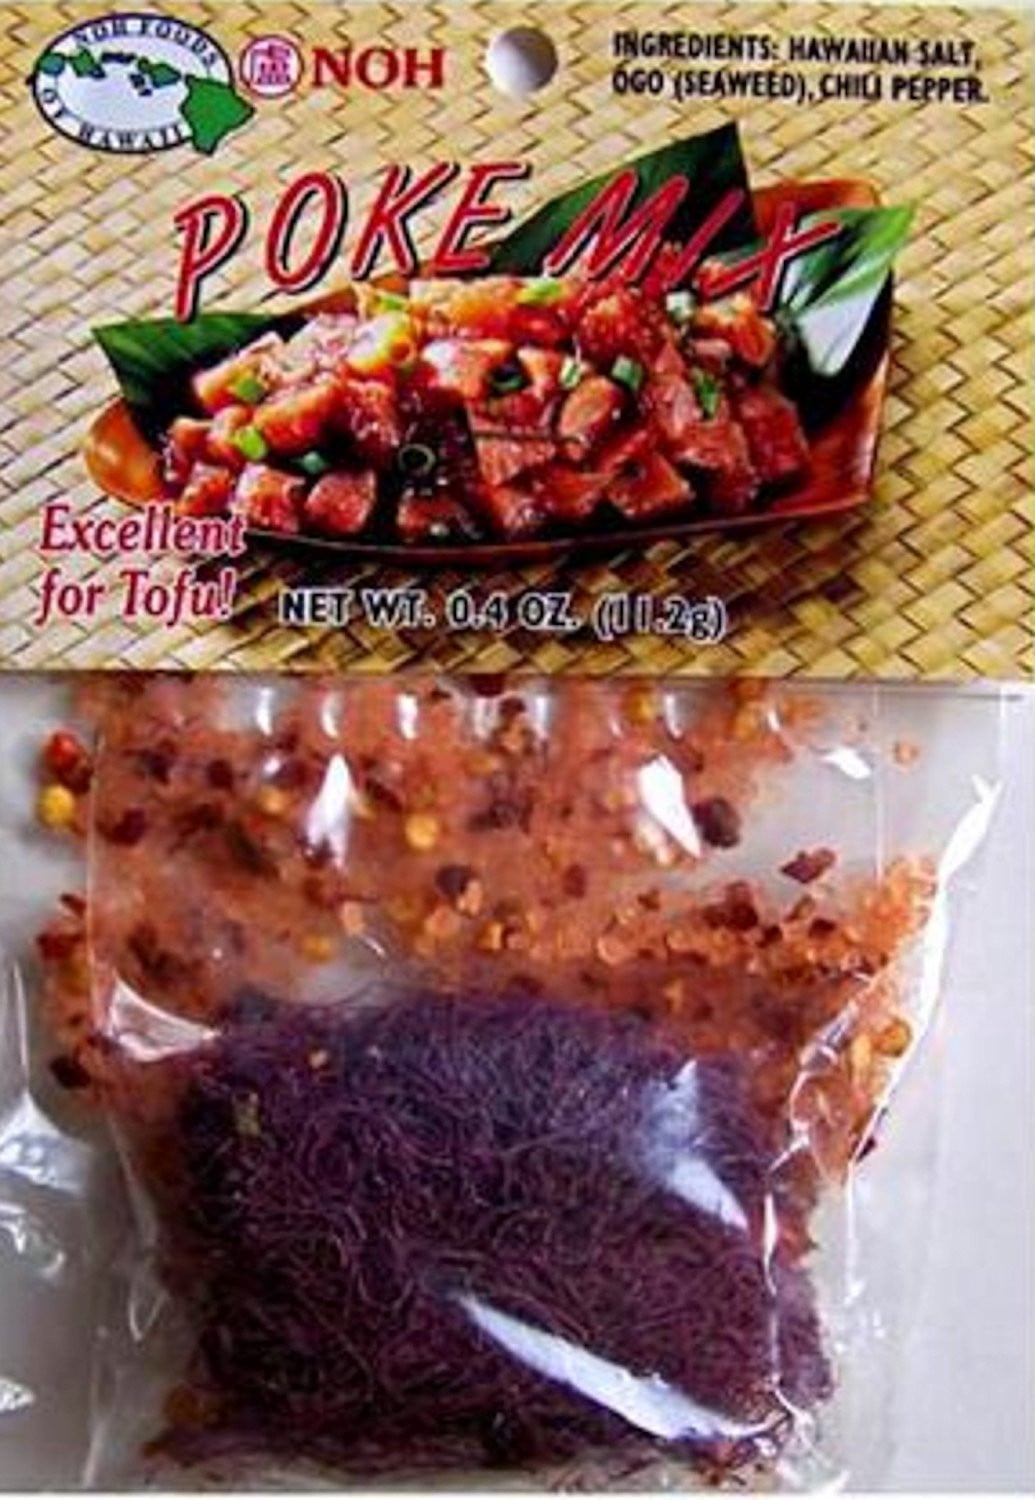 NOH Foods of Hawaii The Original Poke Mix, 0.4 oz (11.2 g)